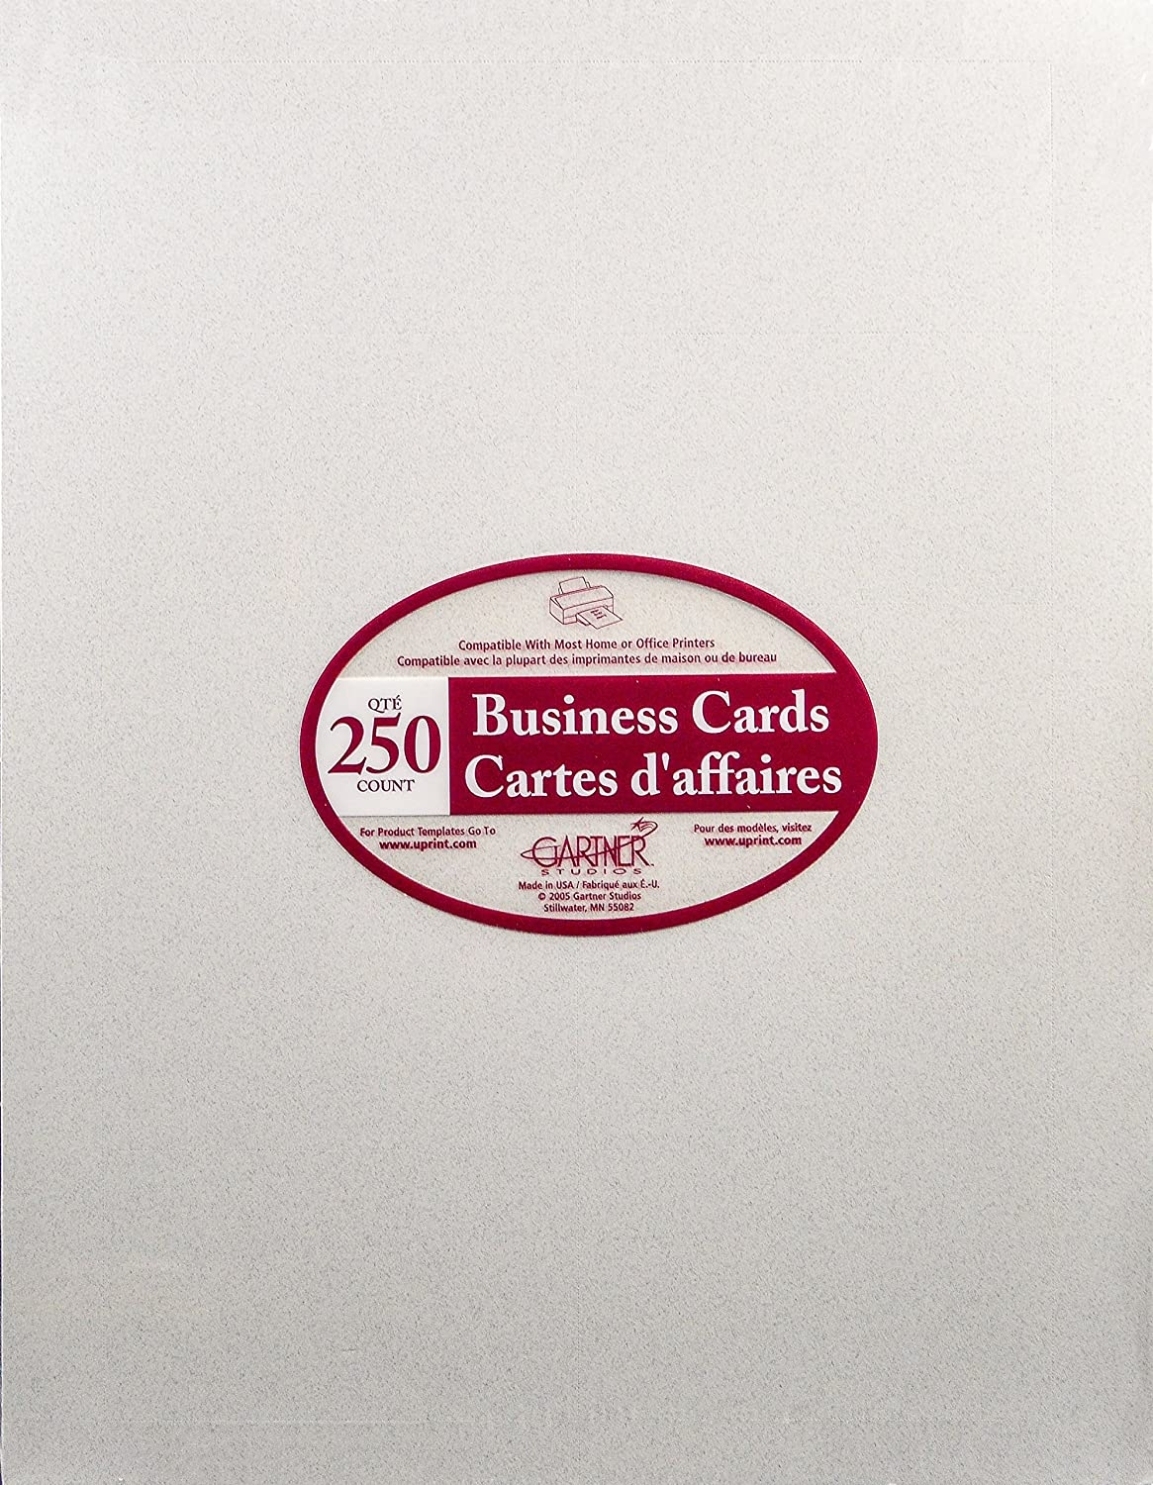 Gartner Business Cards Template – Best Images Limegroup For Gartner Business Cards Template